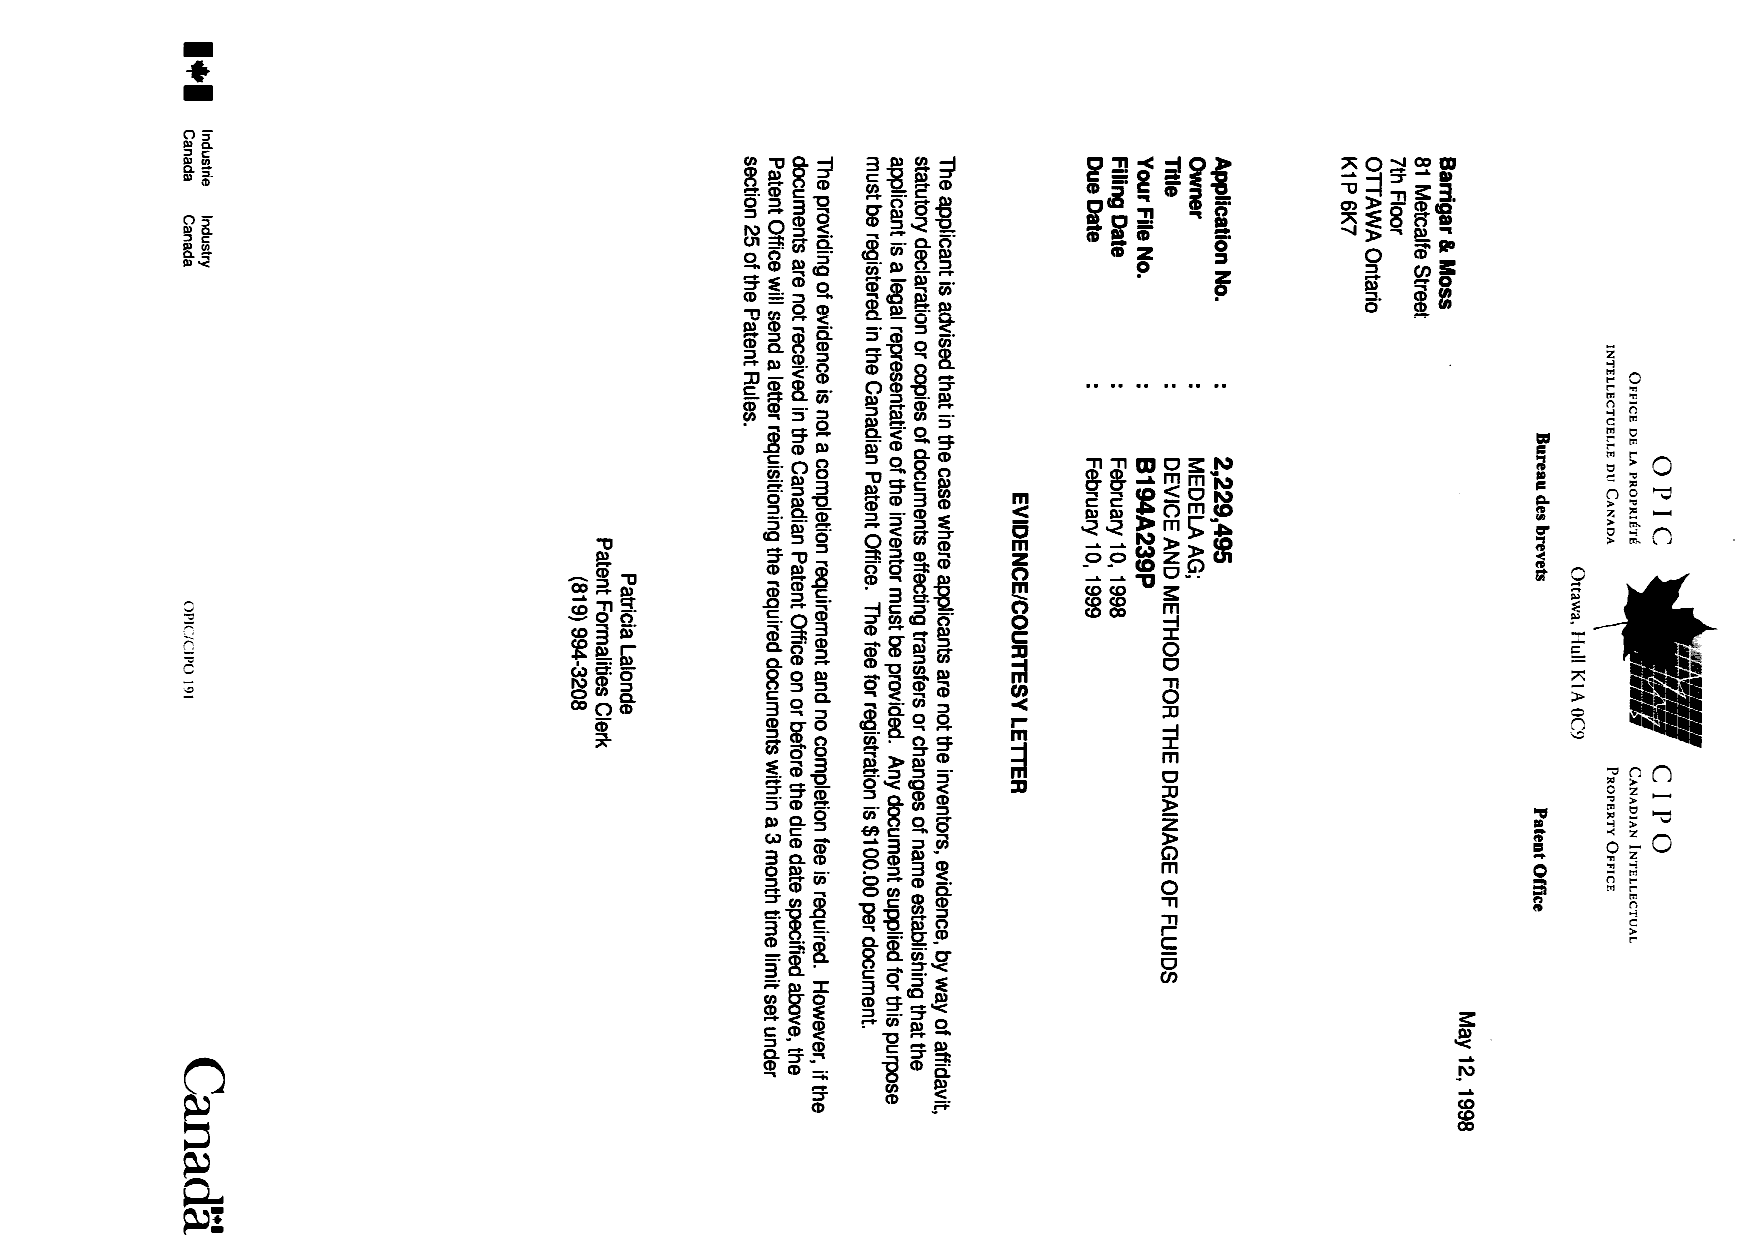 Canadian Patent Document 2229495. Correspondence 19980512. Image 1 of 1